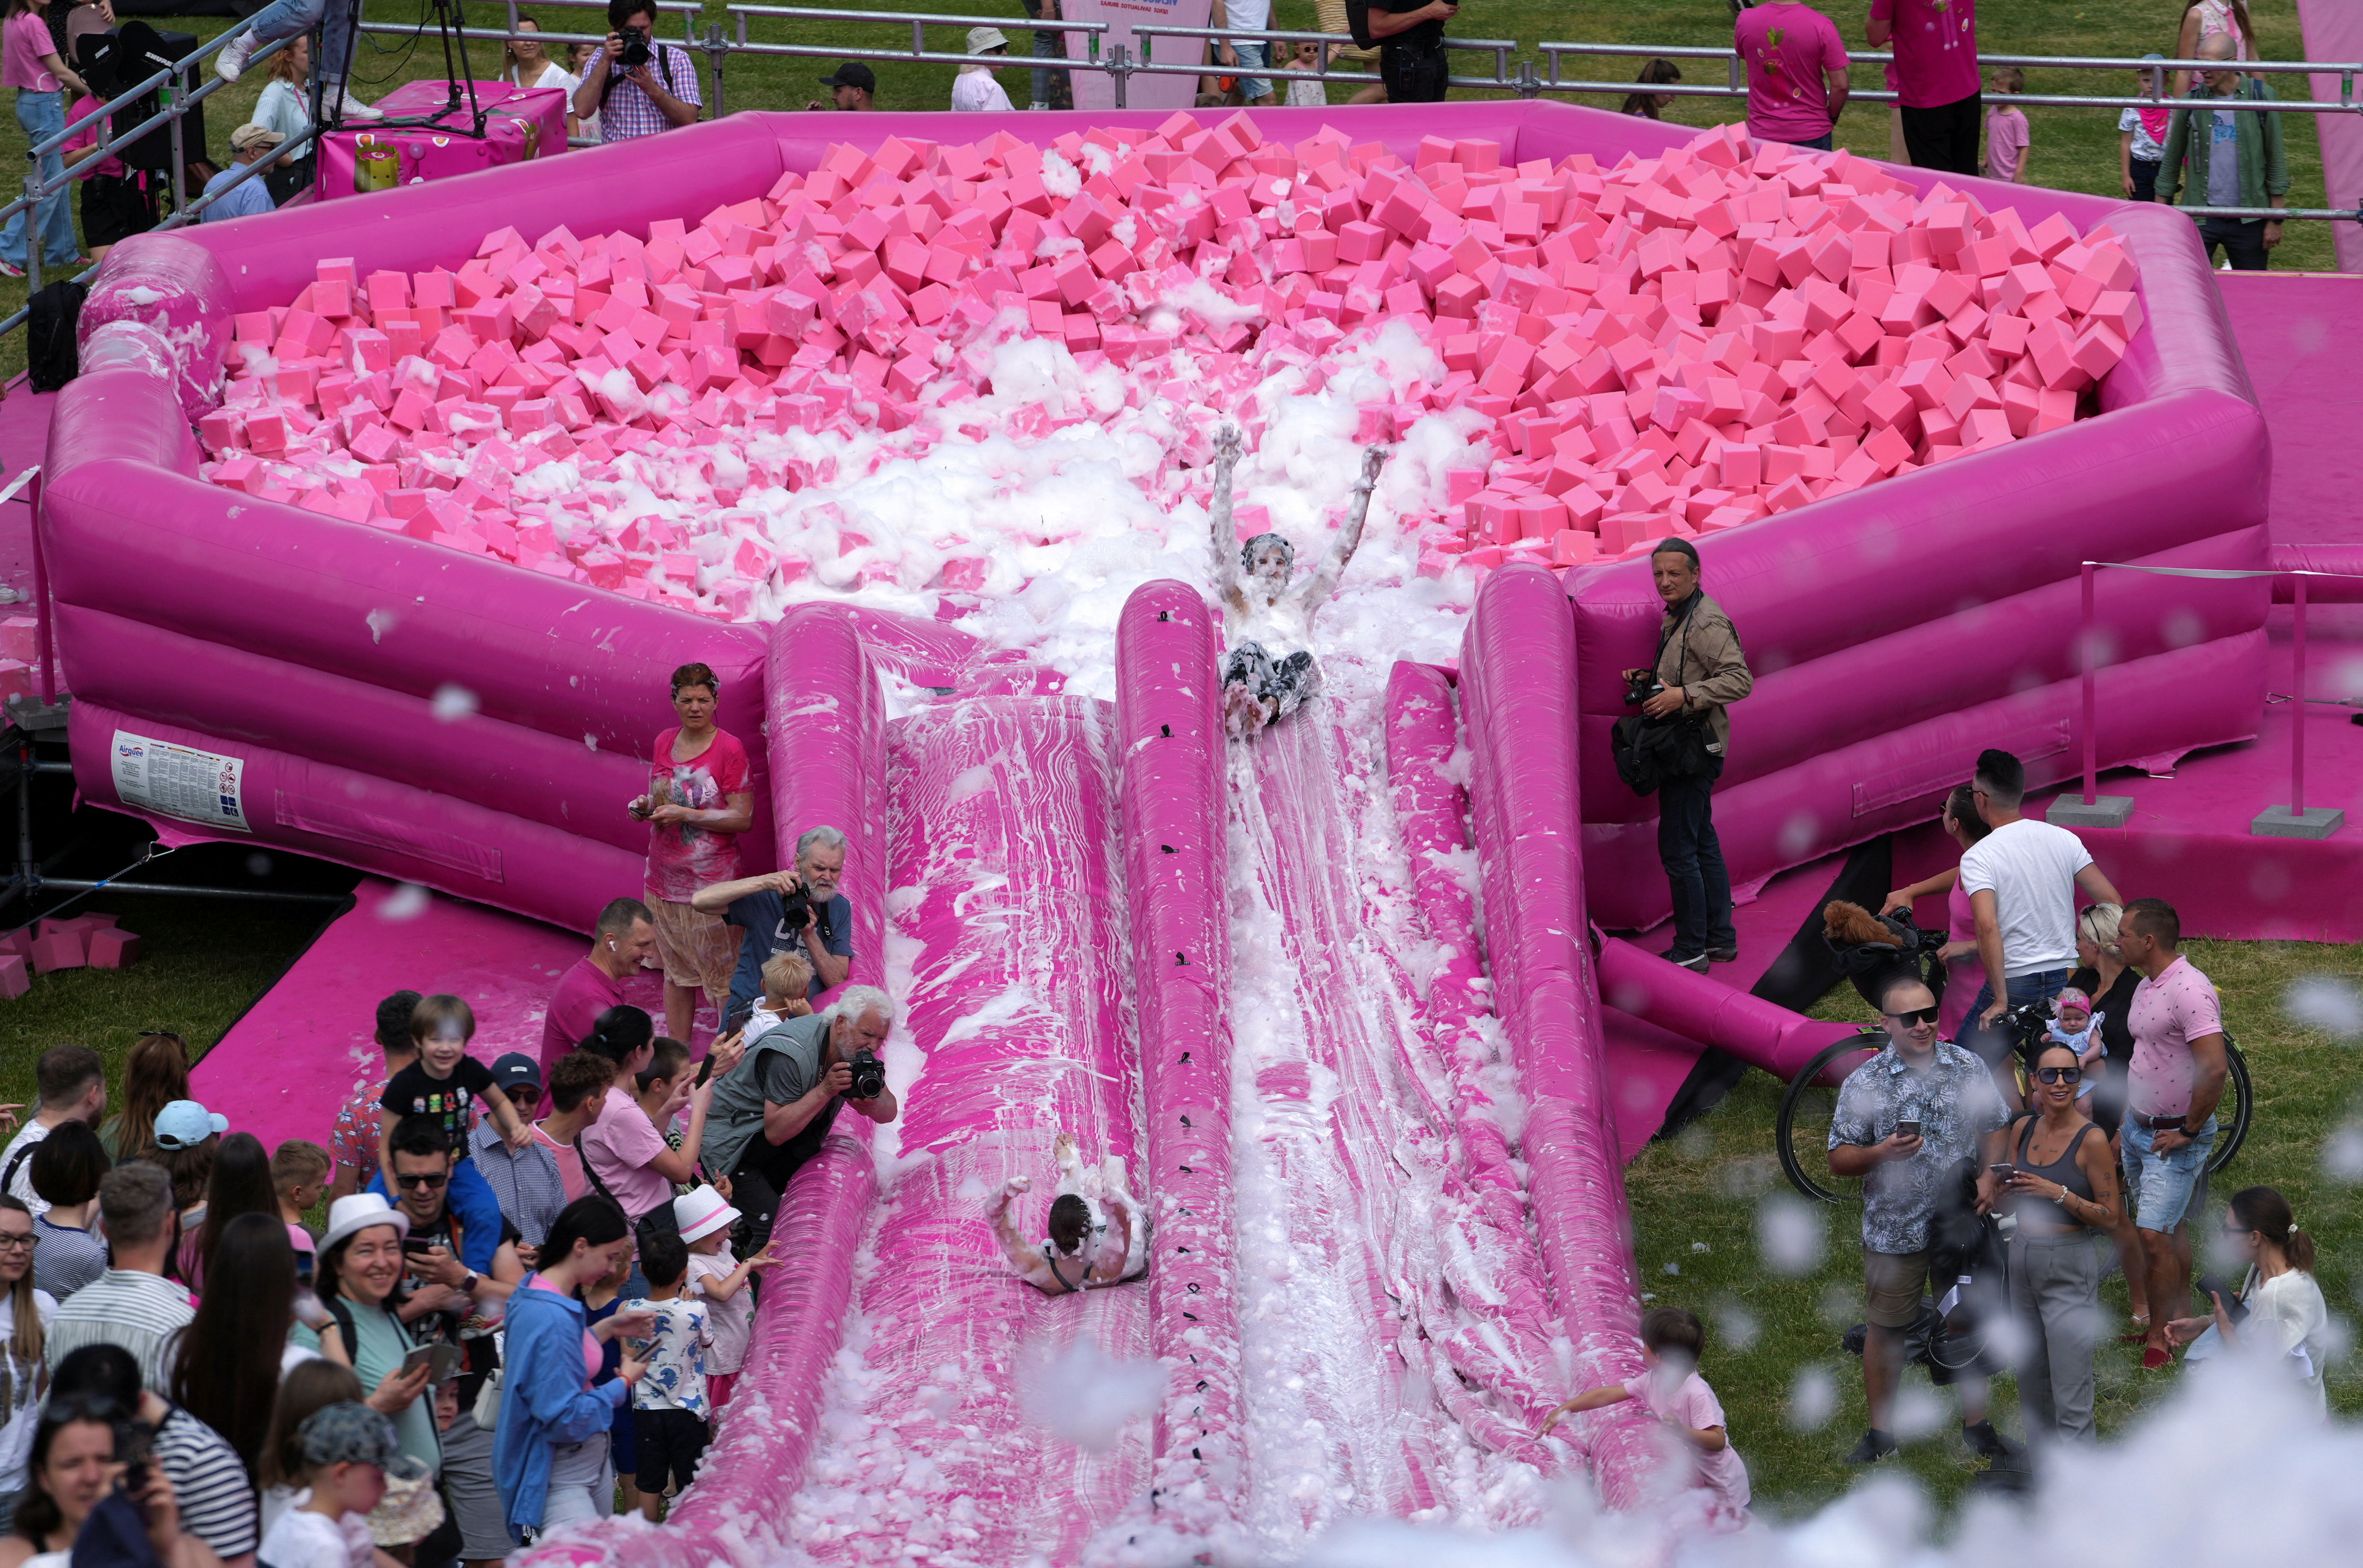 Vilnius celebrates iconic pink soup with festival